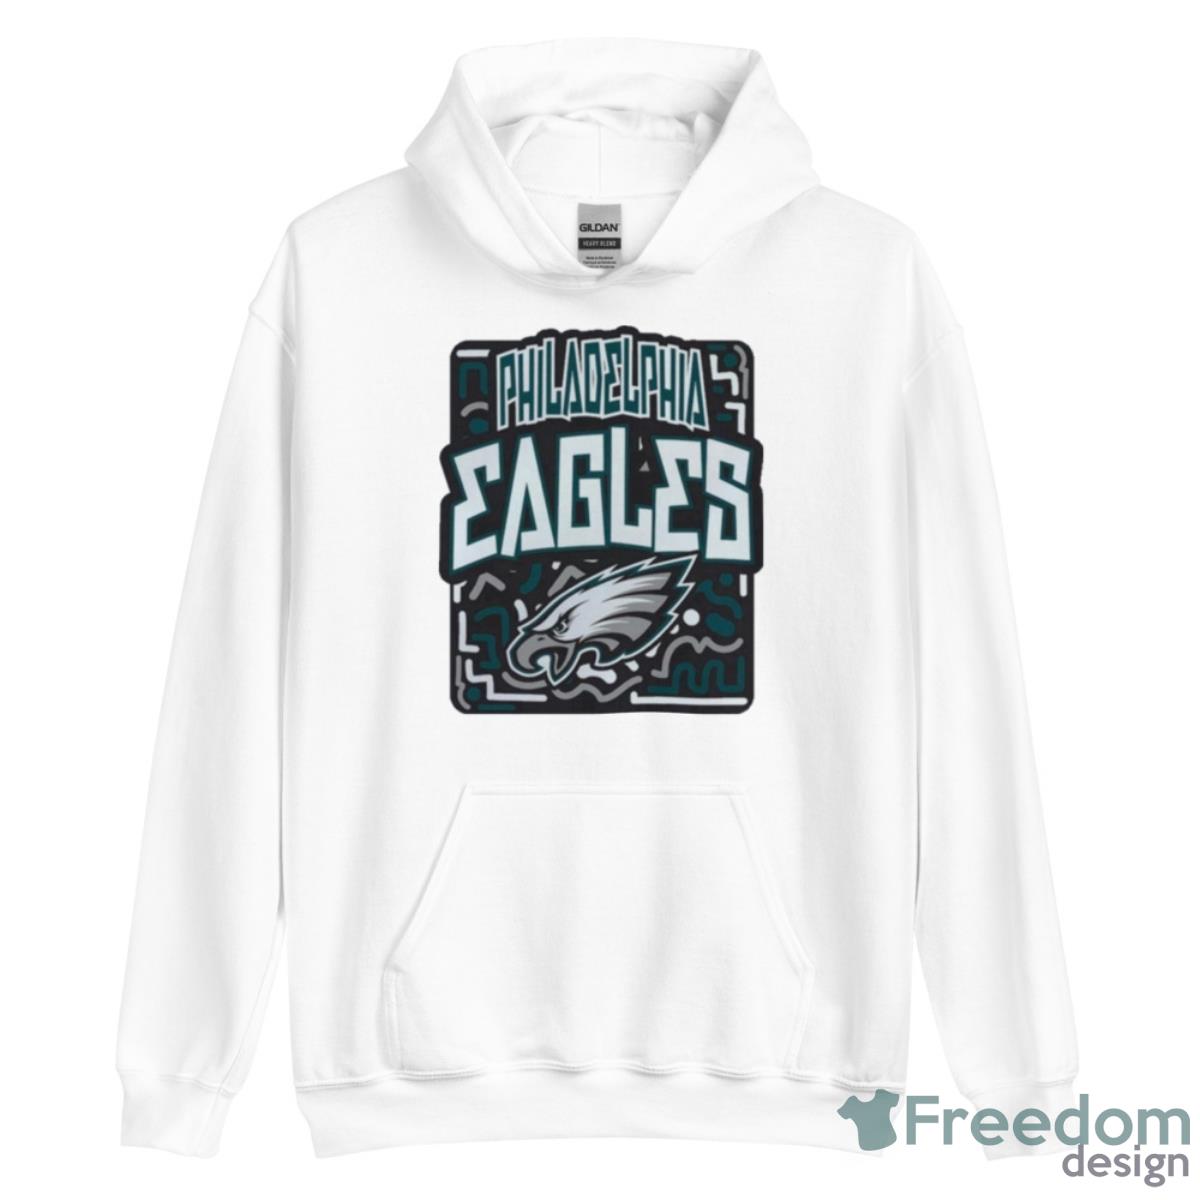 NFL Team Apparel Youth Philadelphia Eagles Tribe Vibe White T-Shirt